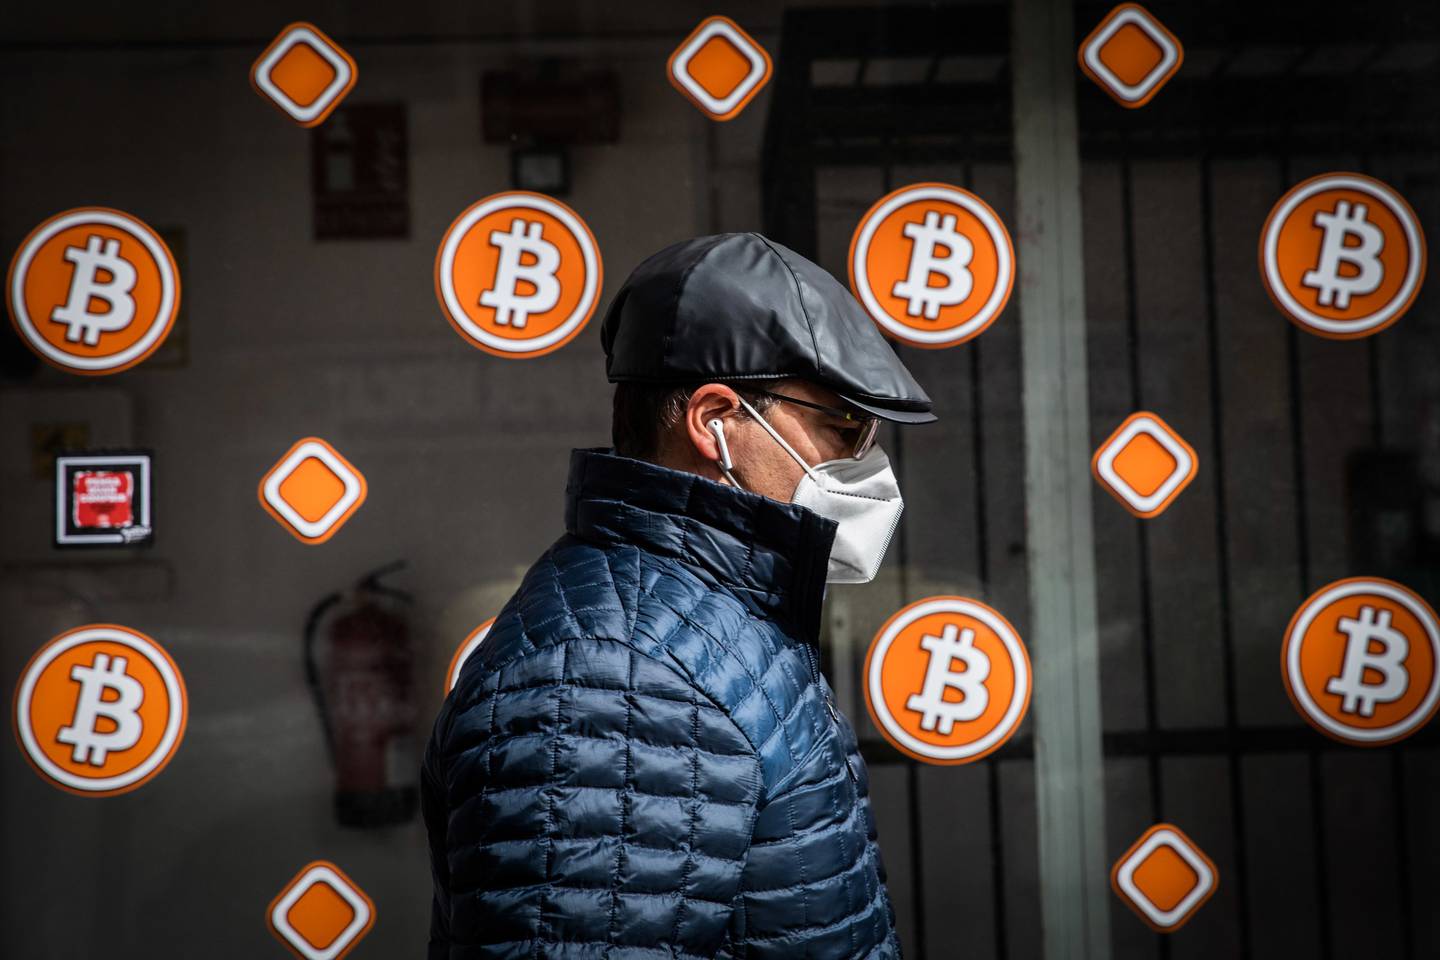 Un peatón con una máscara protectora pasa por un quiosco de cajeros automáticos de bitcoin en Barcelona, España.